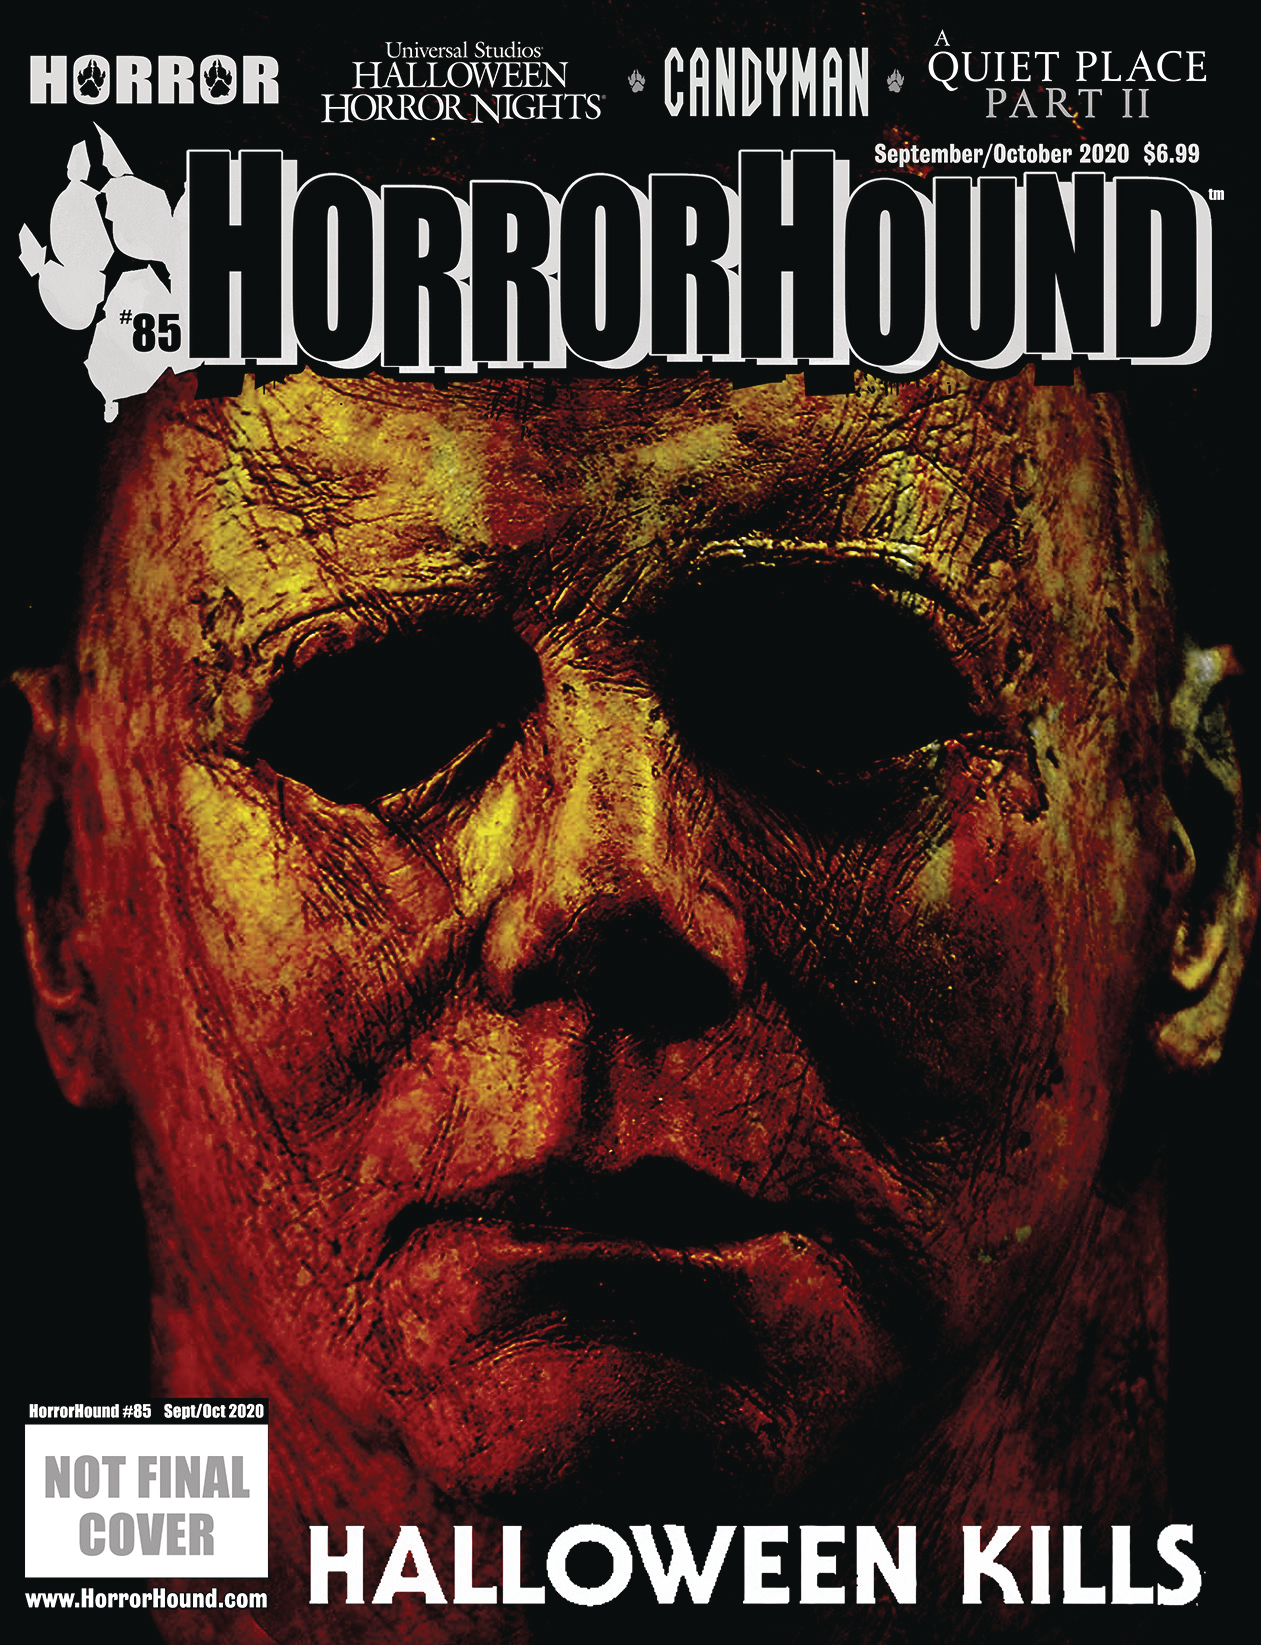 Horrorhound #85